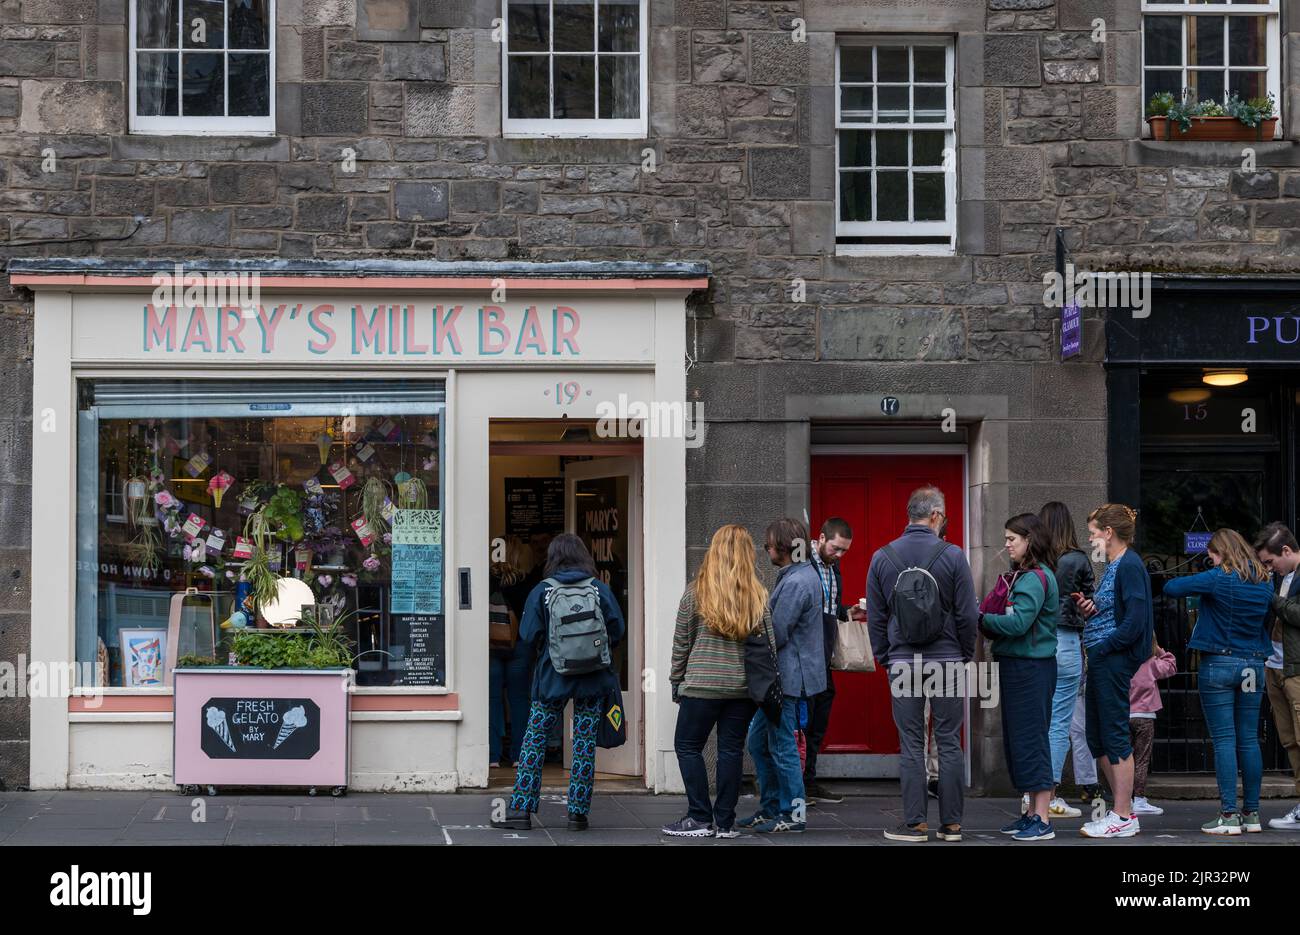 People standing in queue waiting for ice cream, Mary's Milk Bar takeaway ice cream shop, Grassmarket, Edinburgh, Scotland, UK Stock Photo